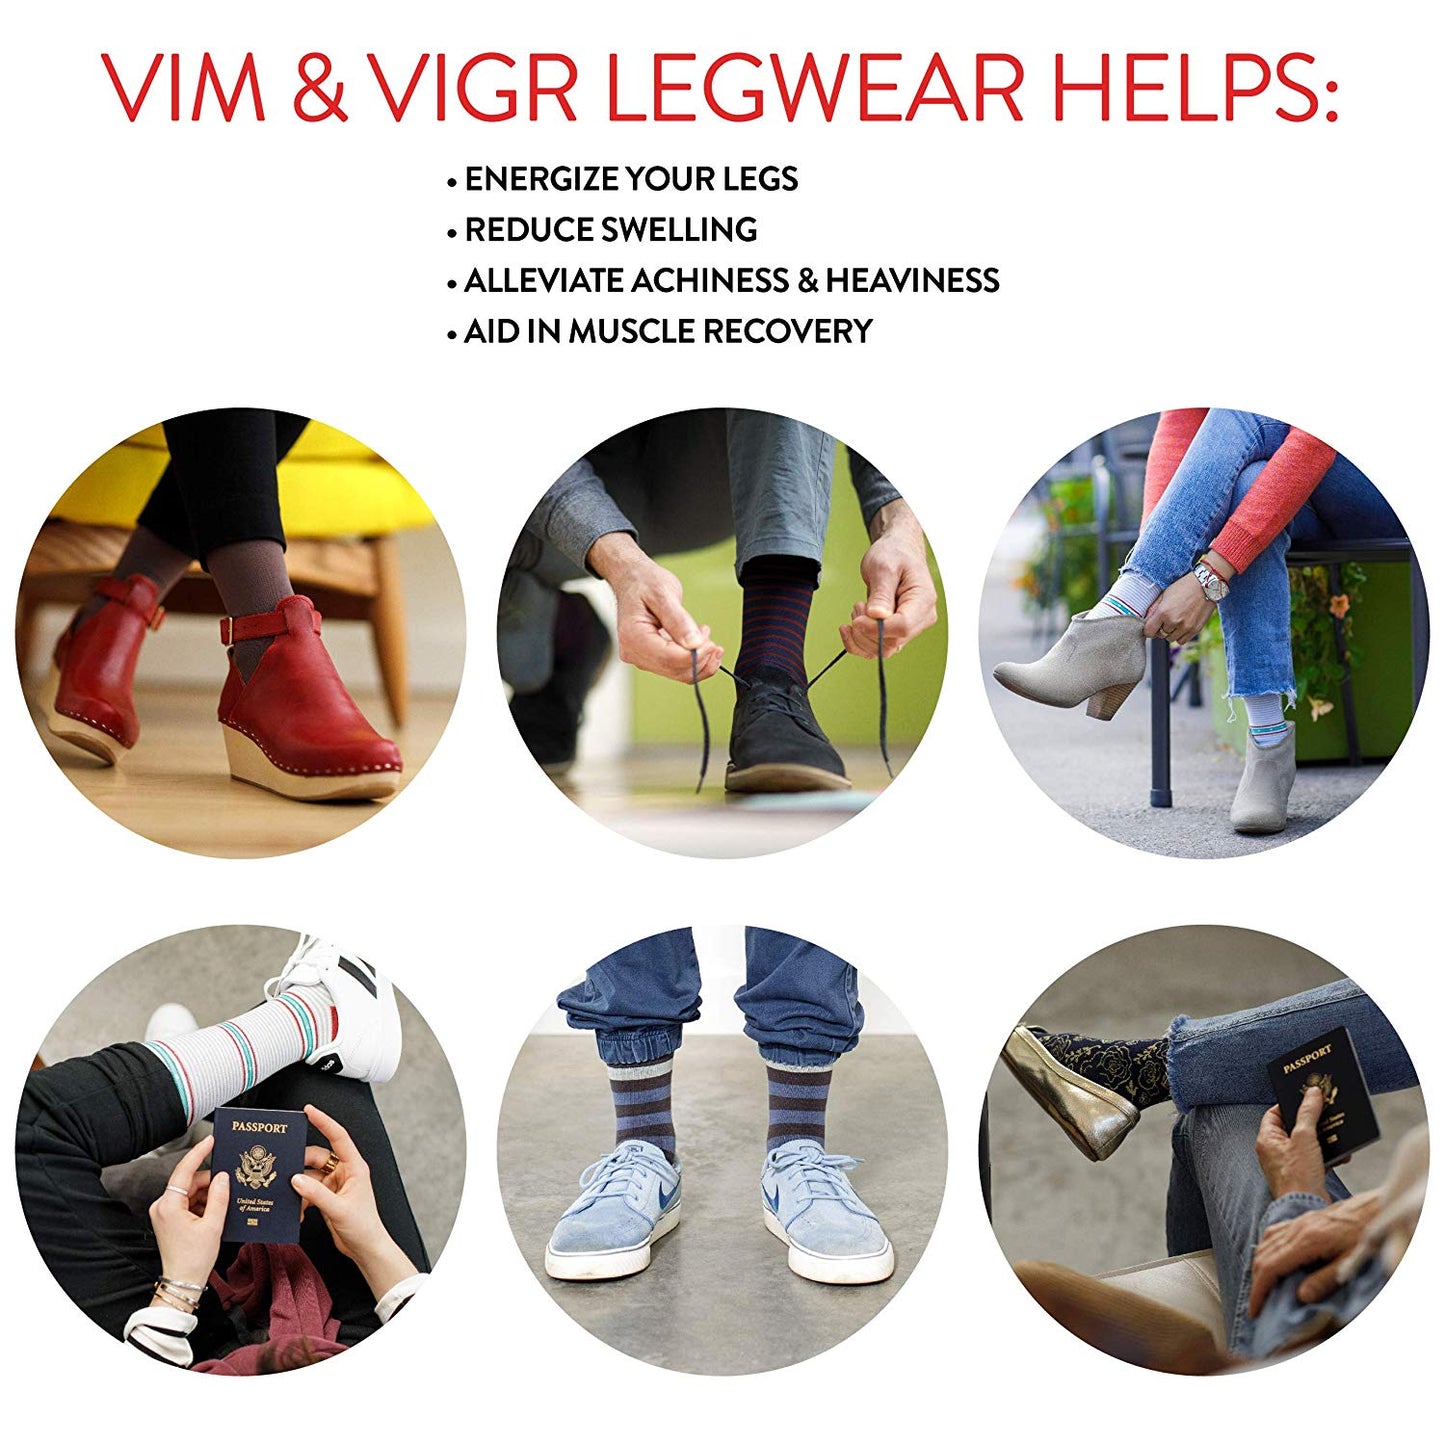 Vim & Vigr Cotton Compression Socks Arcade Stripe, Accessories,- Luna Maternity & Nursing